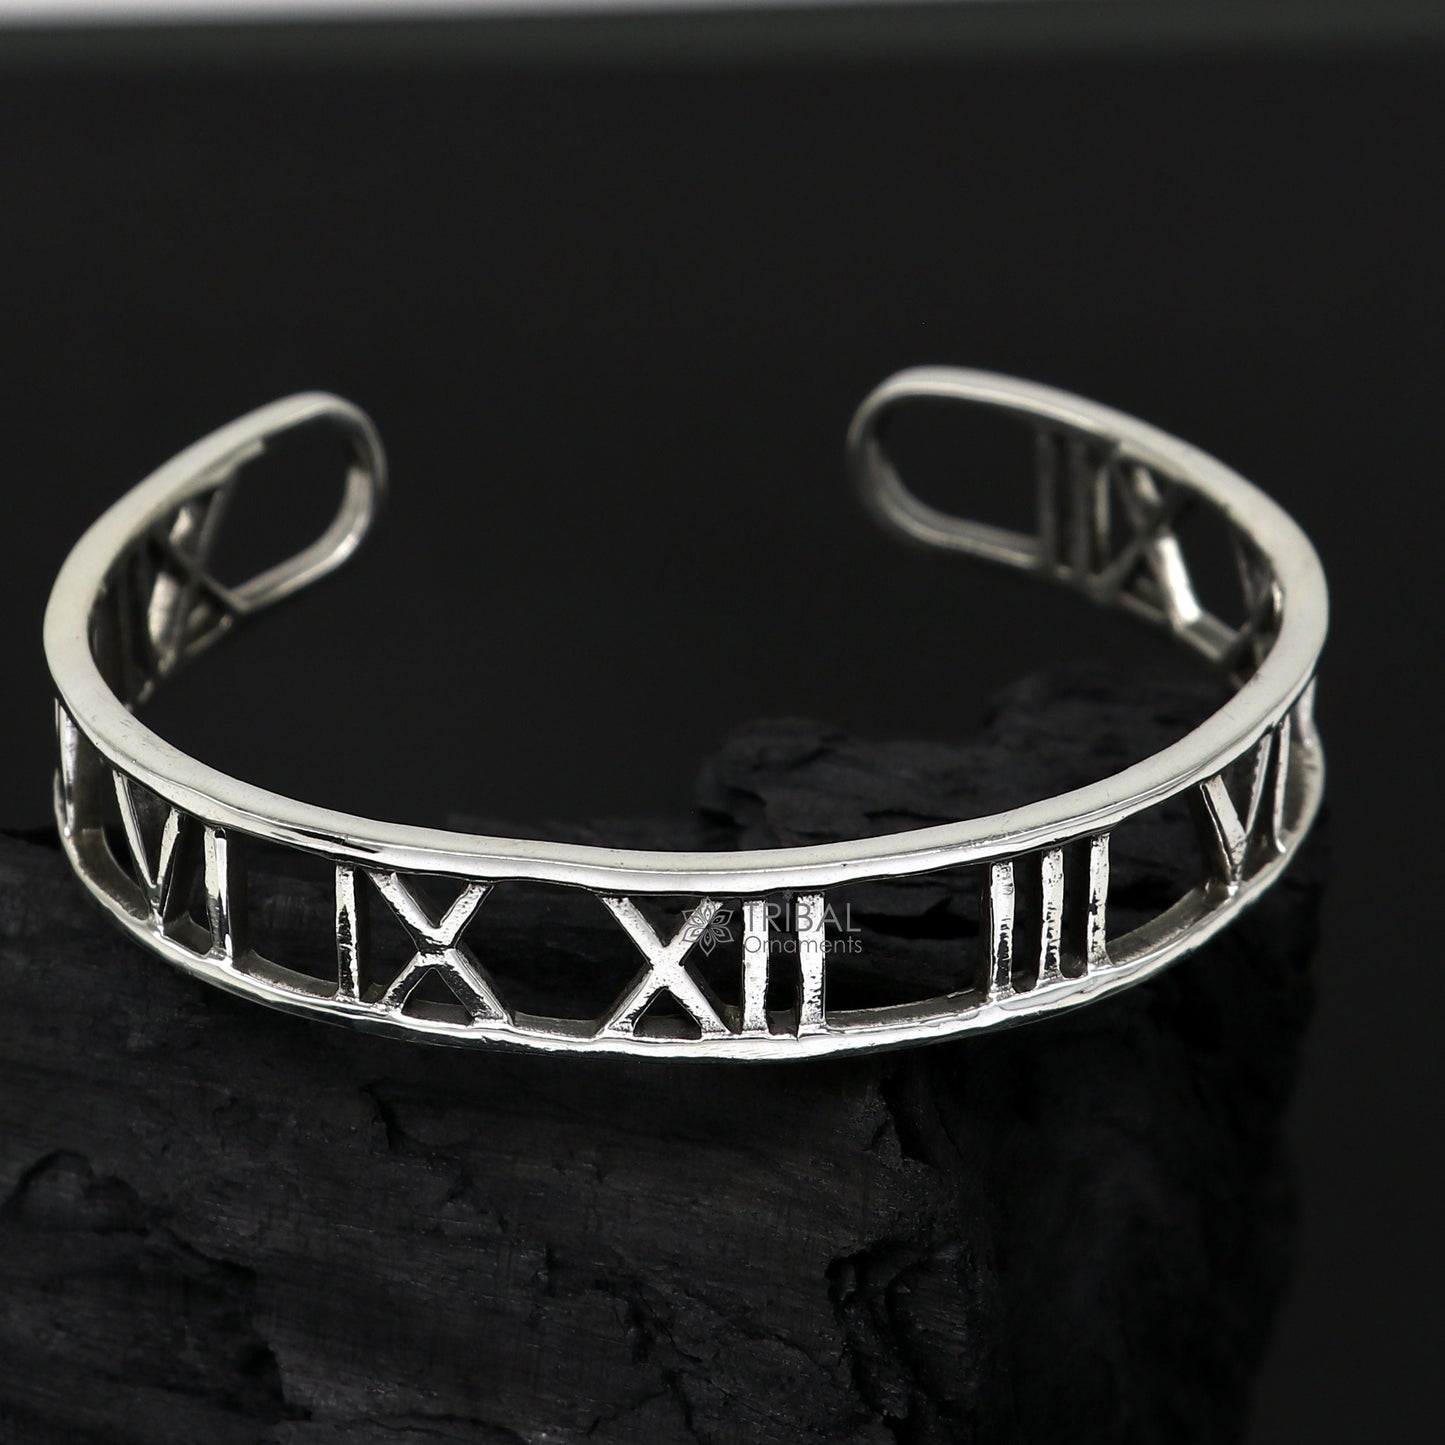 925 sterling silver handmade solid Roman number design fashion kada cuff bracelet, cuff kada unsex gifting jewelry solid silver kada cuff153 - TRIBAL ORNAMENTS